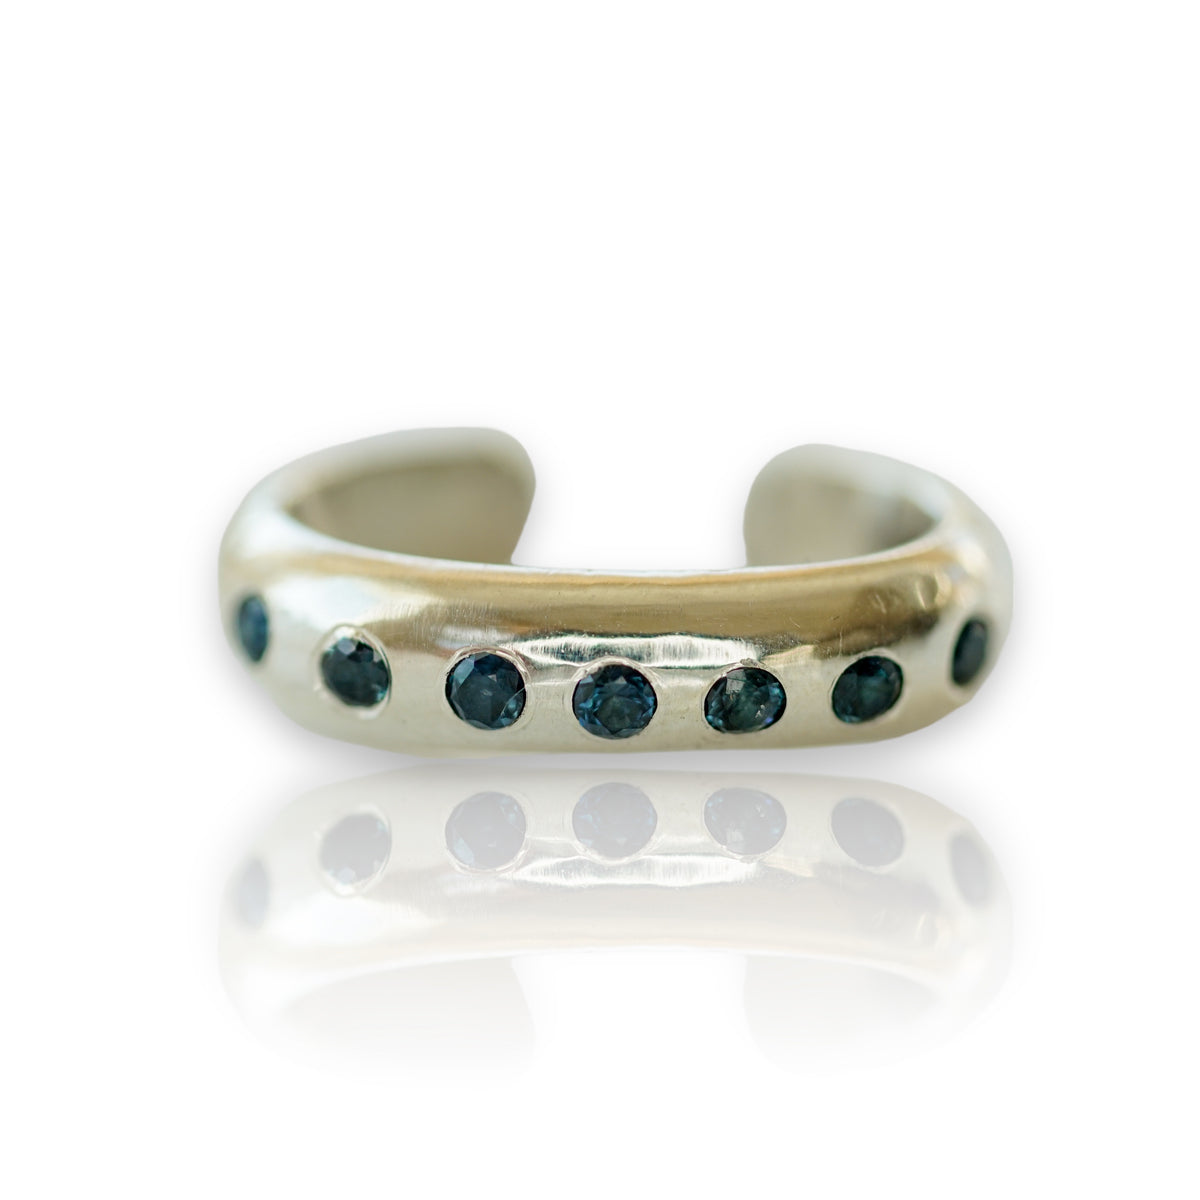 Blue sapphire ear cuff in silver